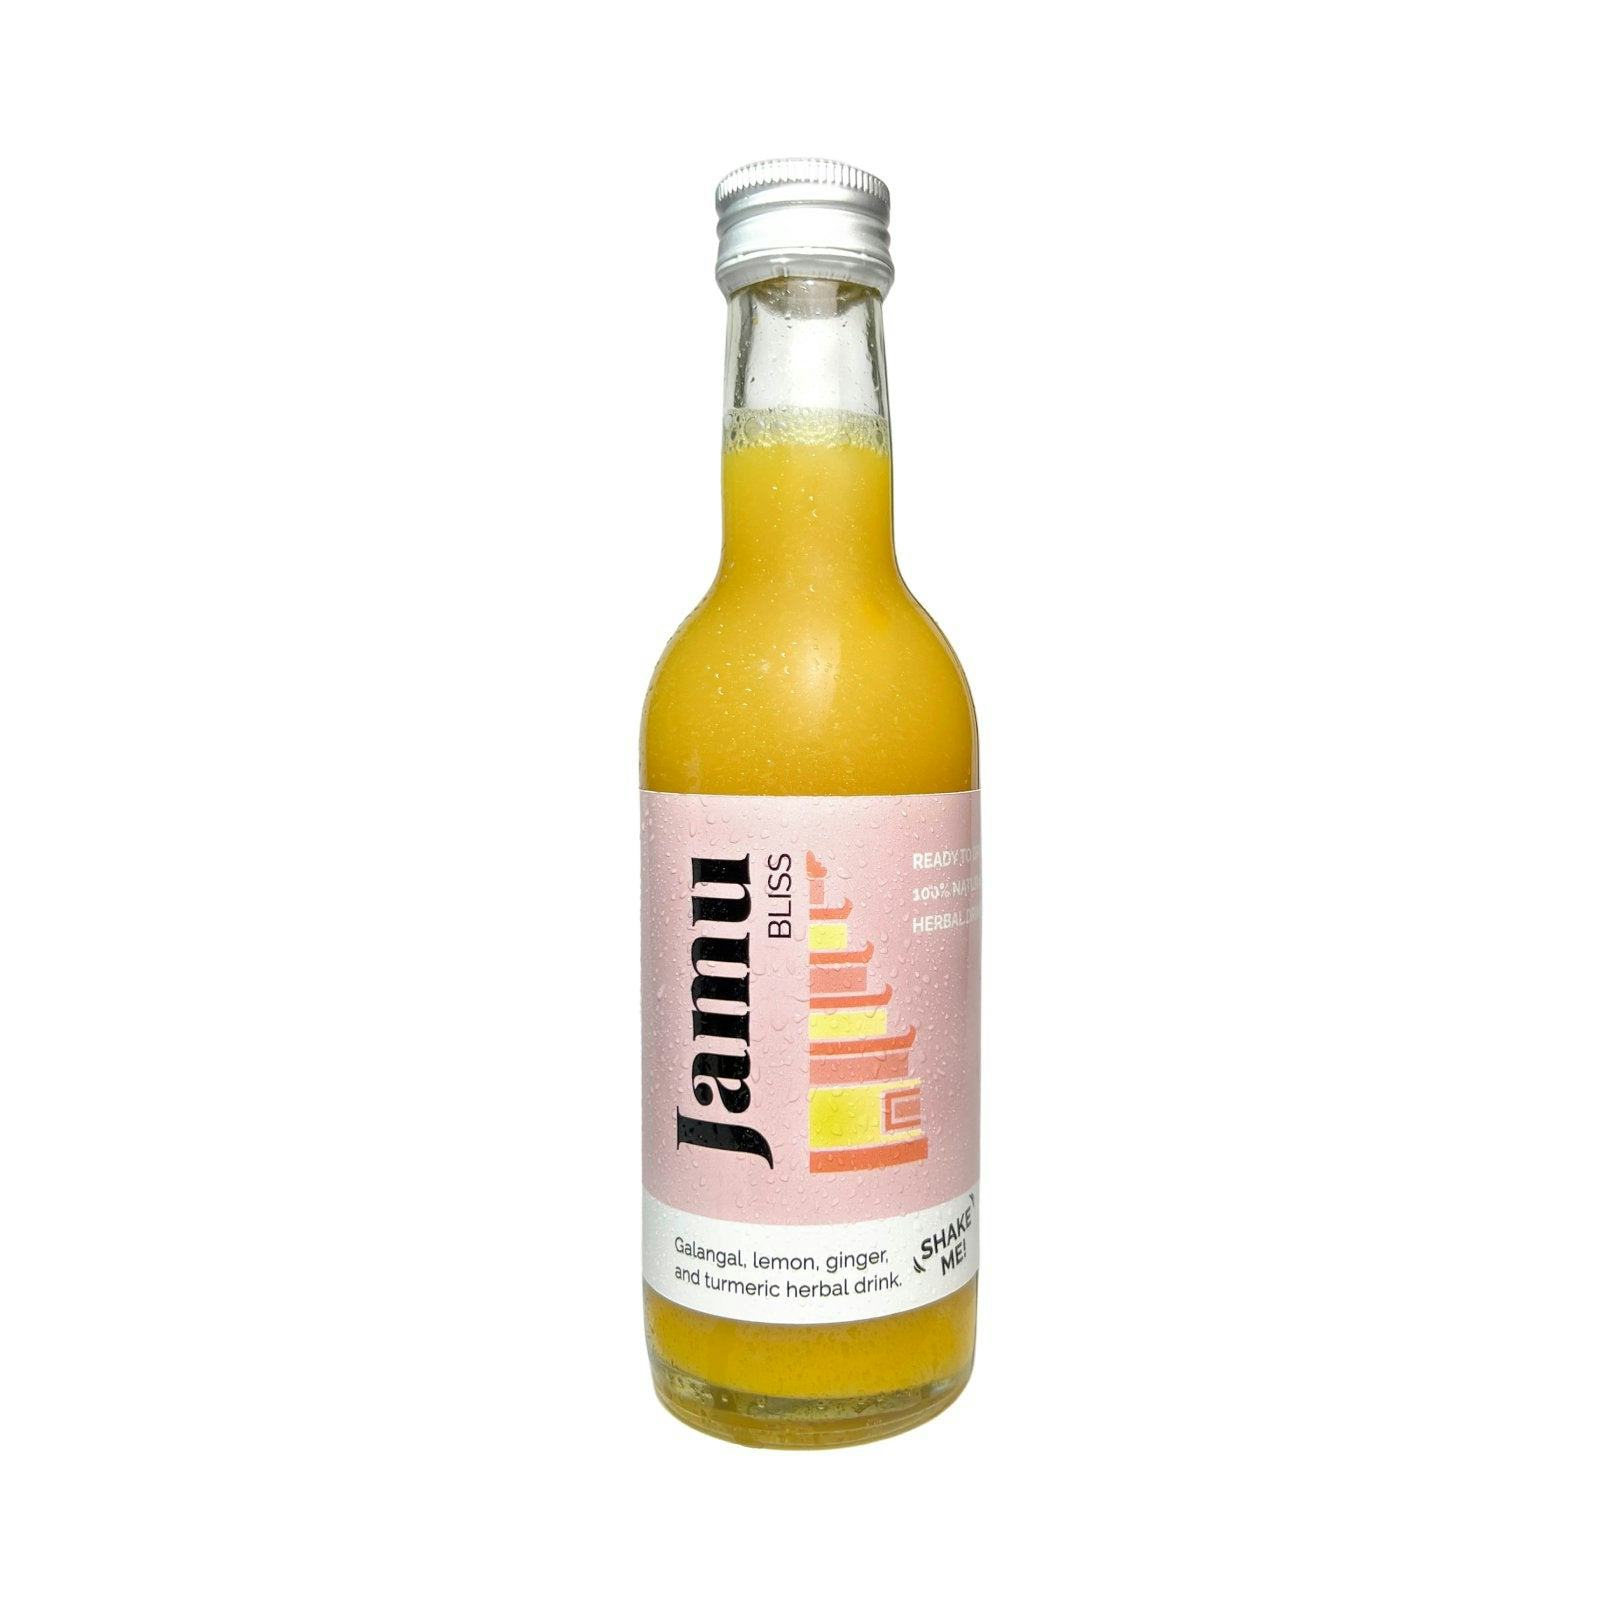 Jamu Bliss, Galangal drink, produit artisanal en vente directe en Suisse